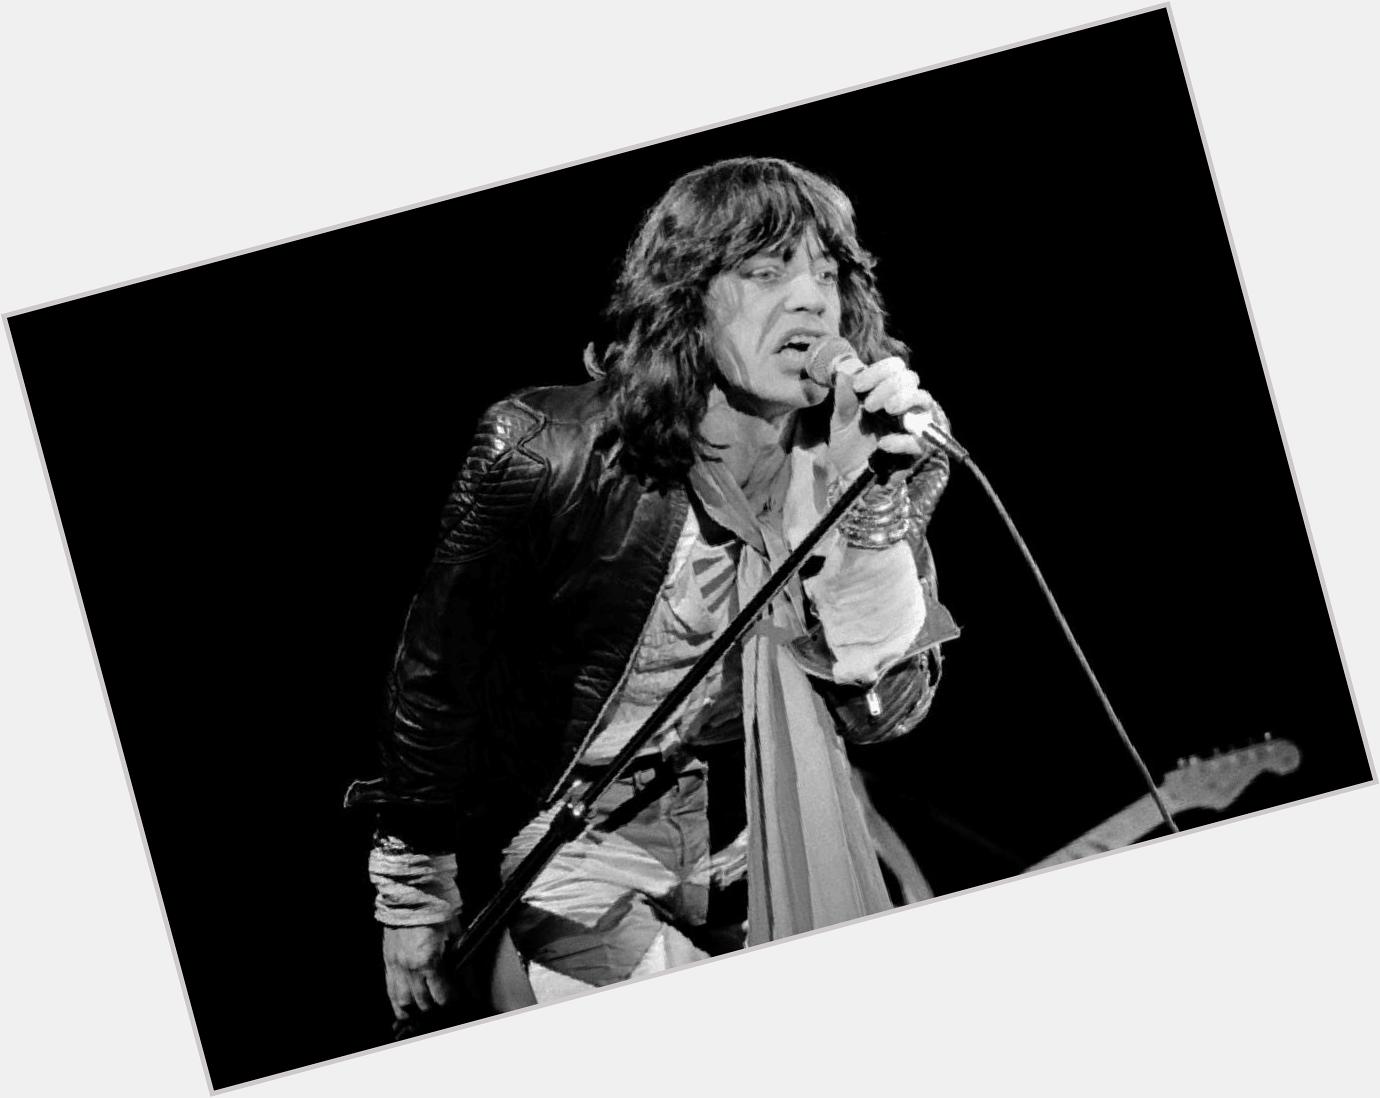 Happy 76th birthday to Mick Jagger!  